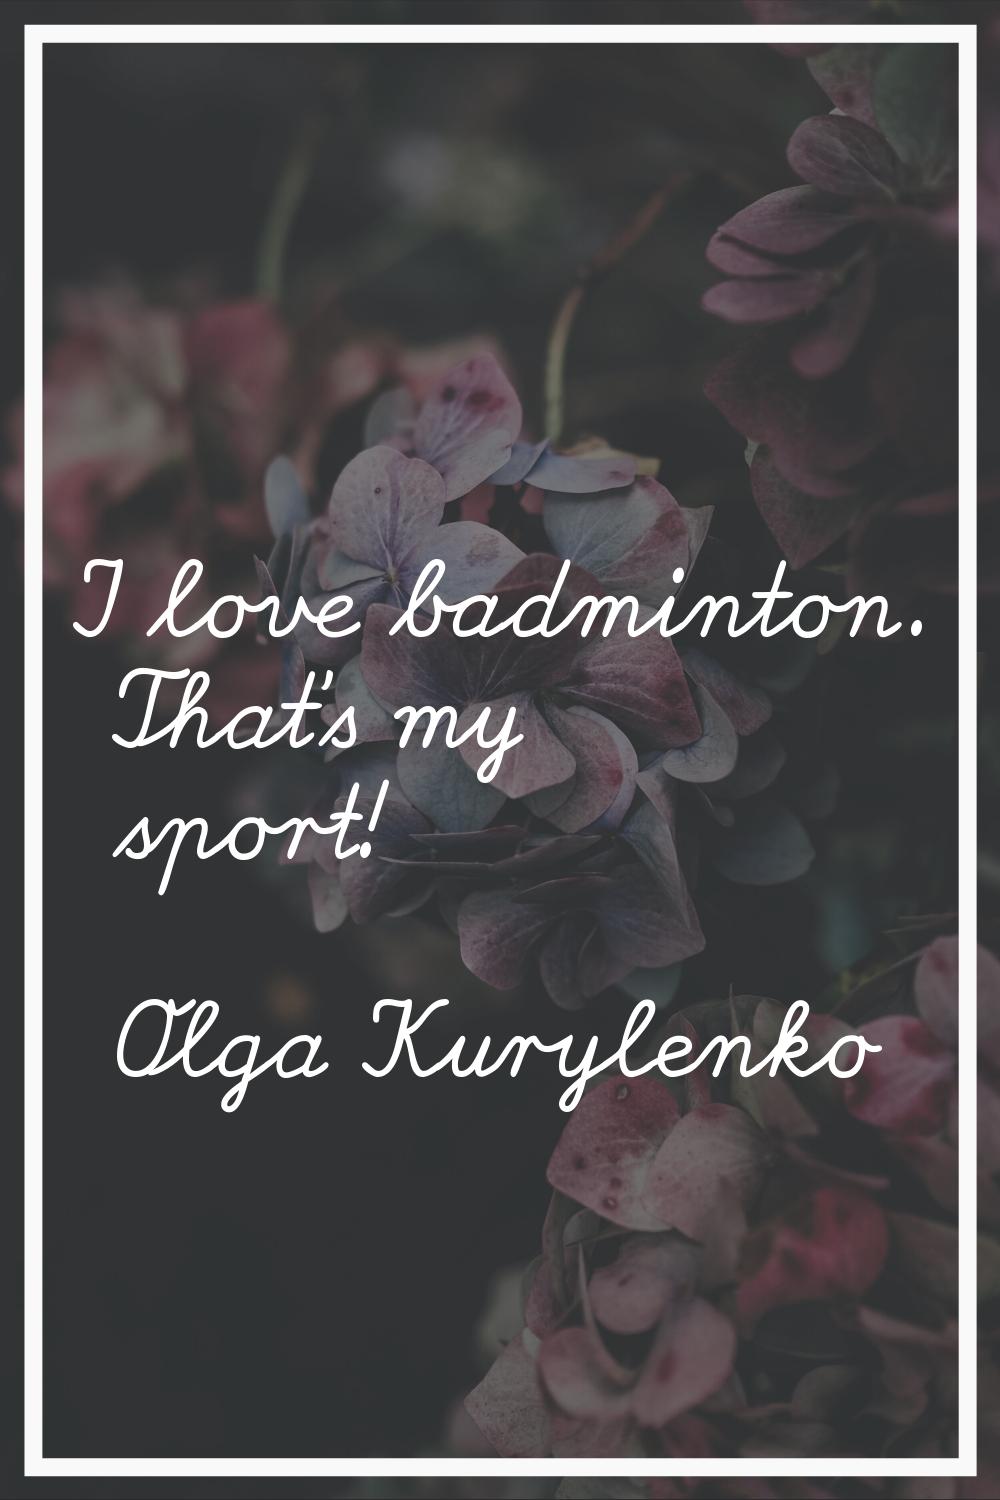 I love badminton. That's my sport!